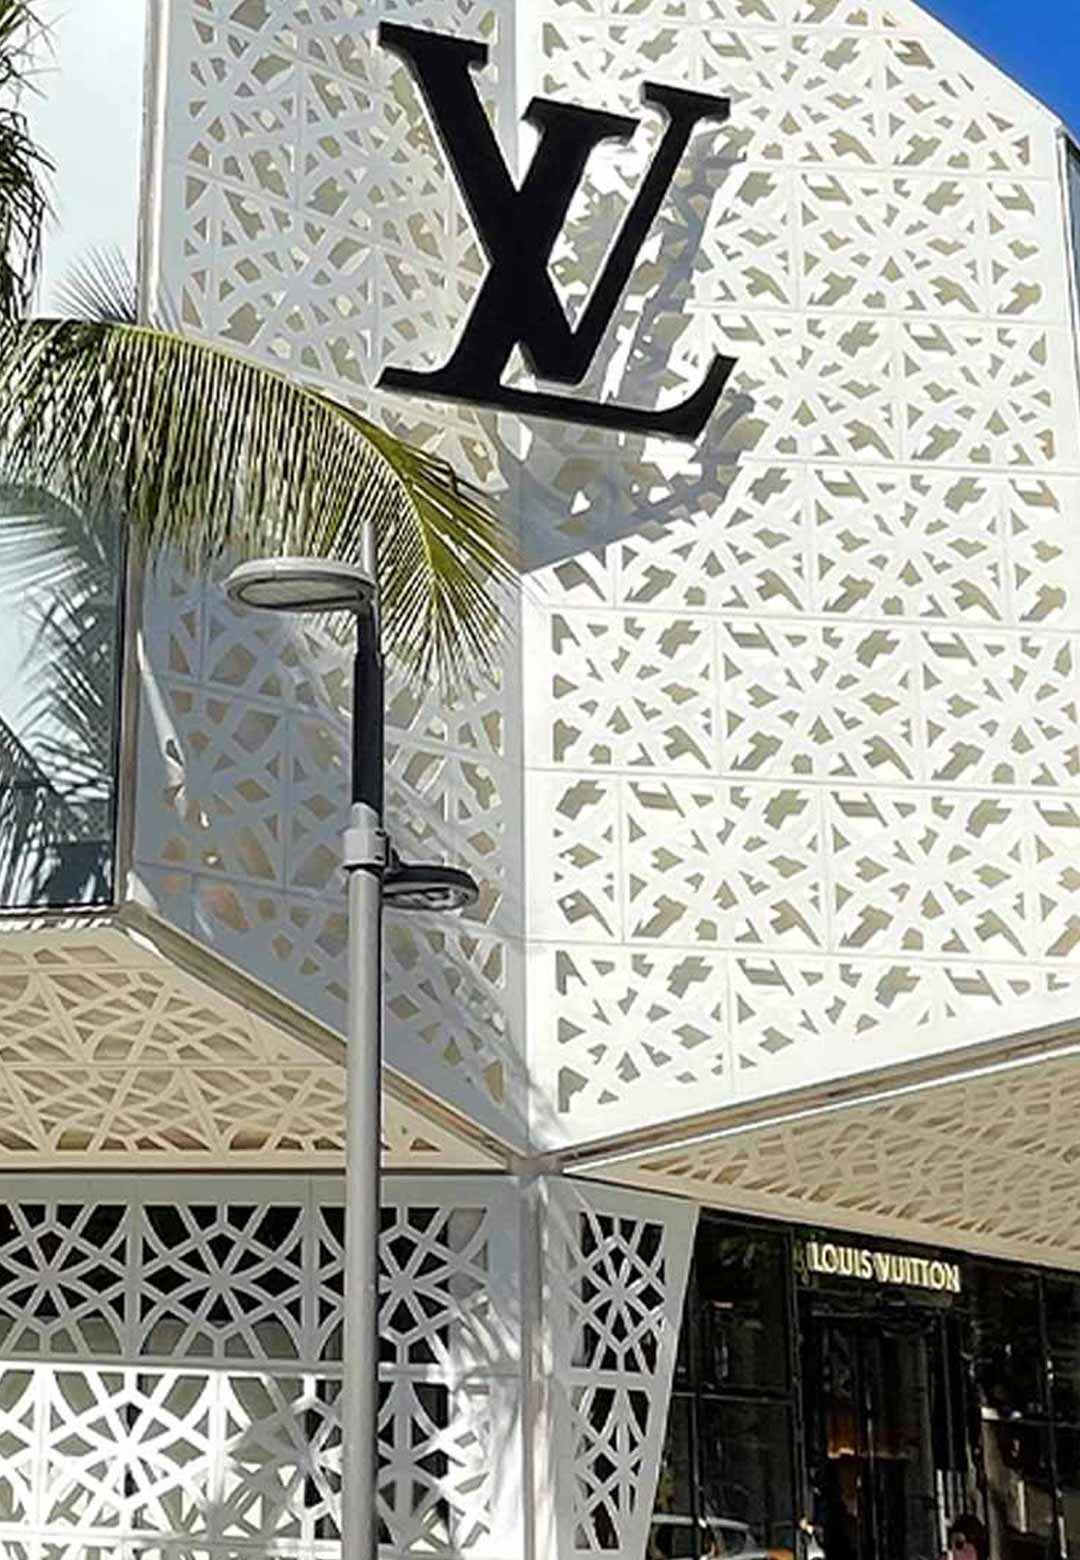 Marcel Wanders studio designs the Diamond Facade for Louis